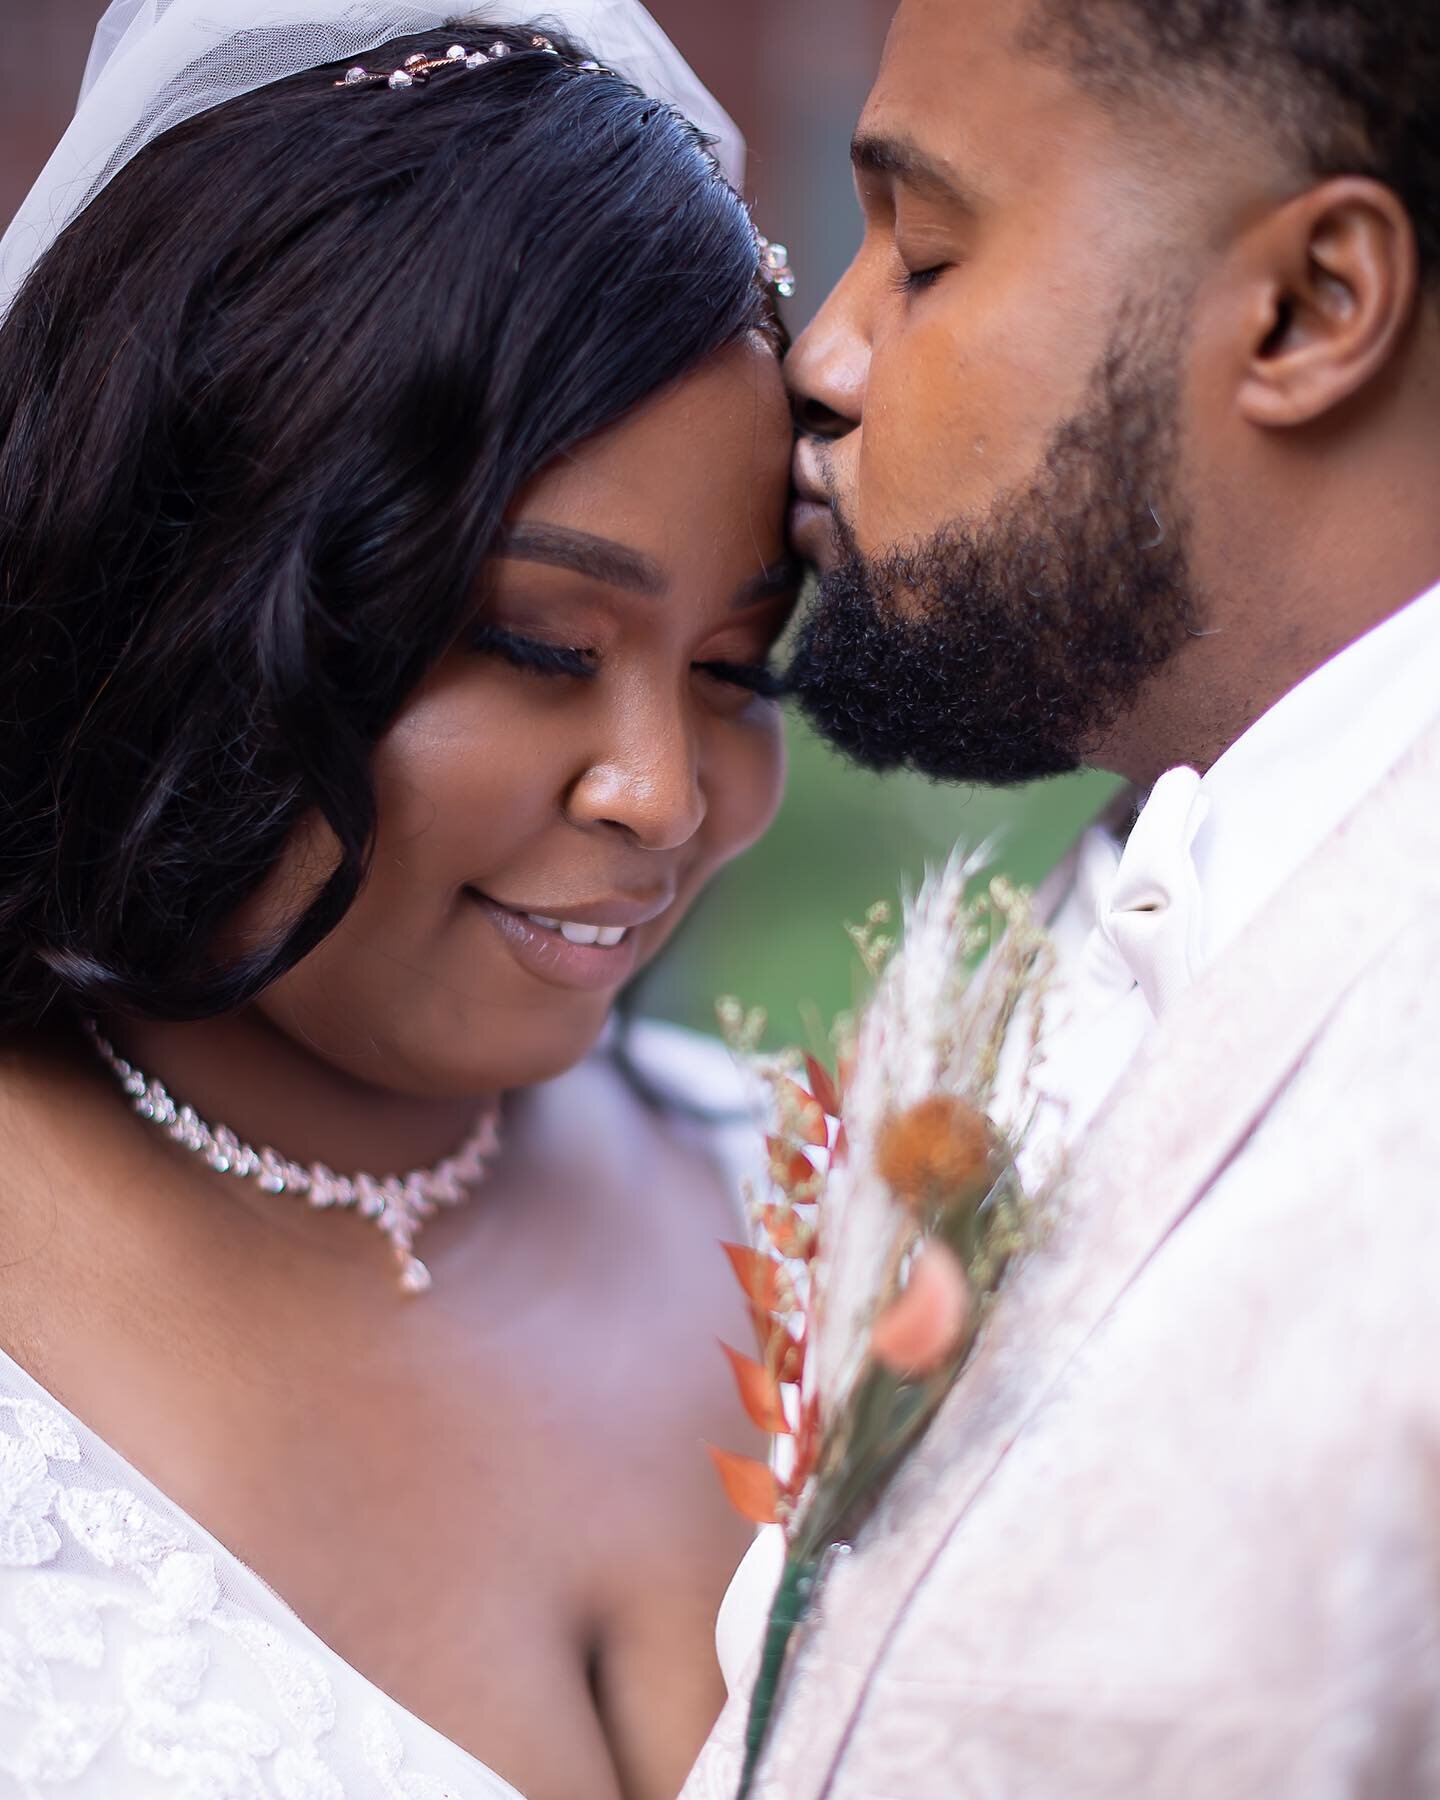 Donna + Tyrone

- The Mejias

#mlphotography #wedding #blackbrides #blacklove #ido #alabamaphotographer #love